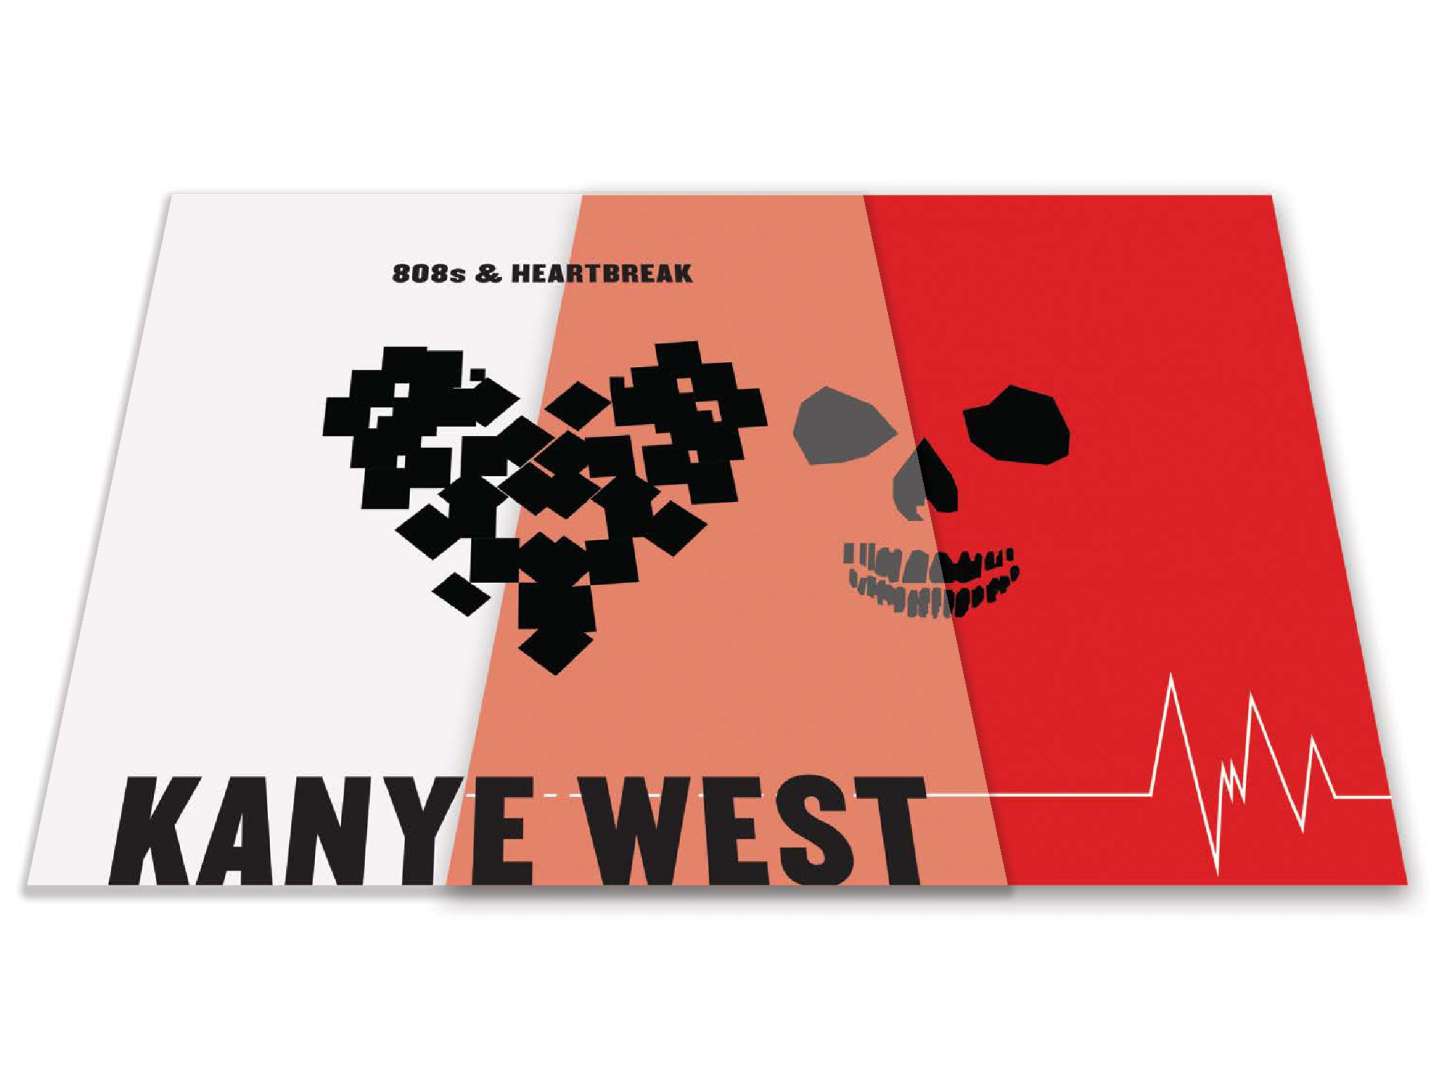 Kanye West Vinyl: 808s & Heartbreak